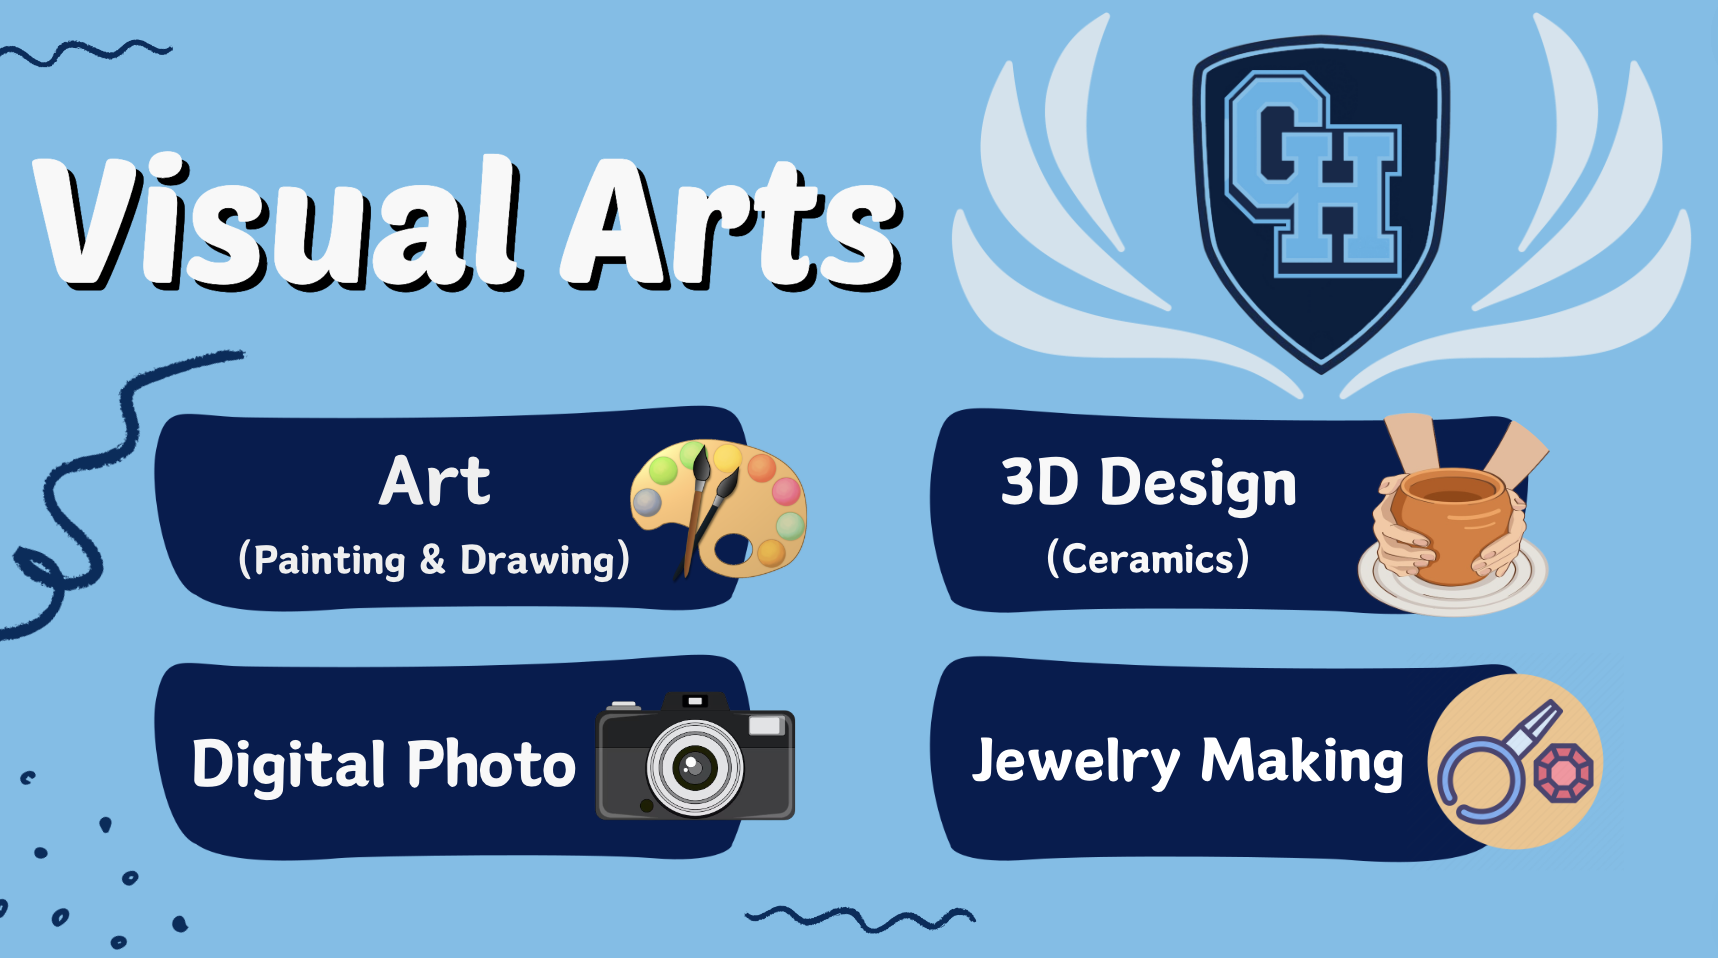 Visual Arts Art, 3D Design, Digital Photo, Jewelry Making